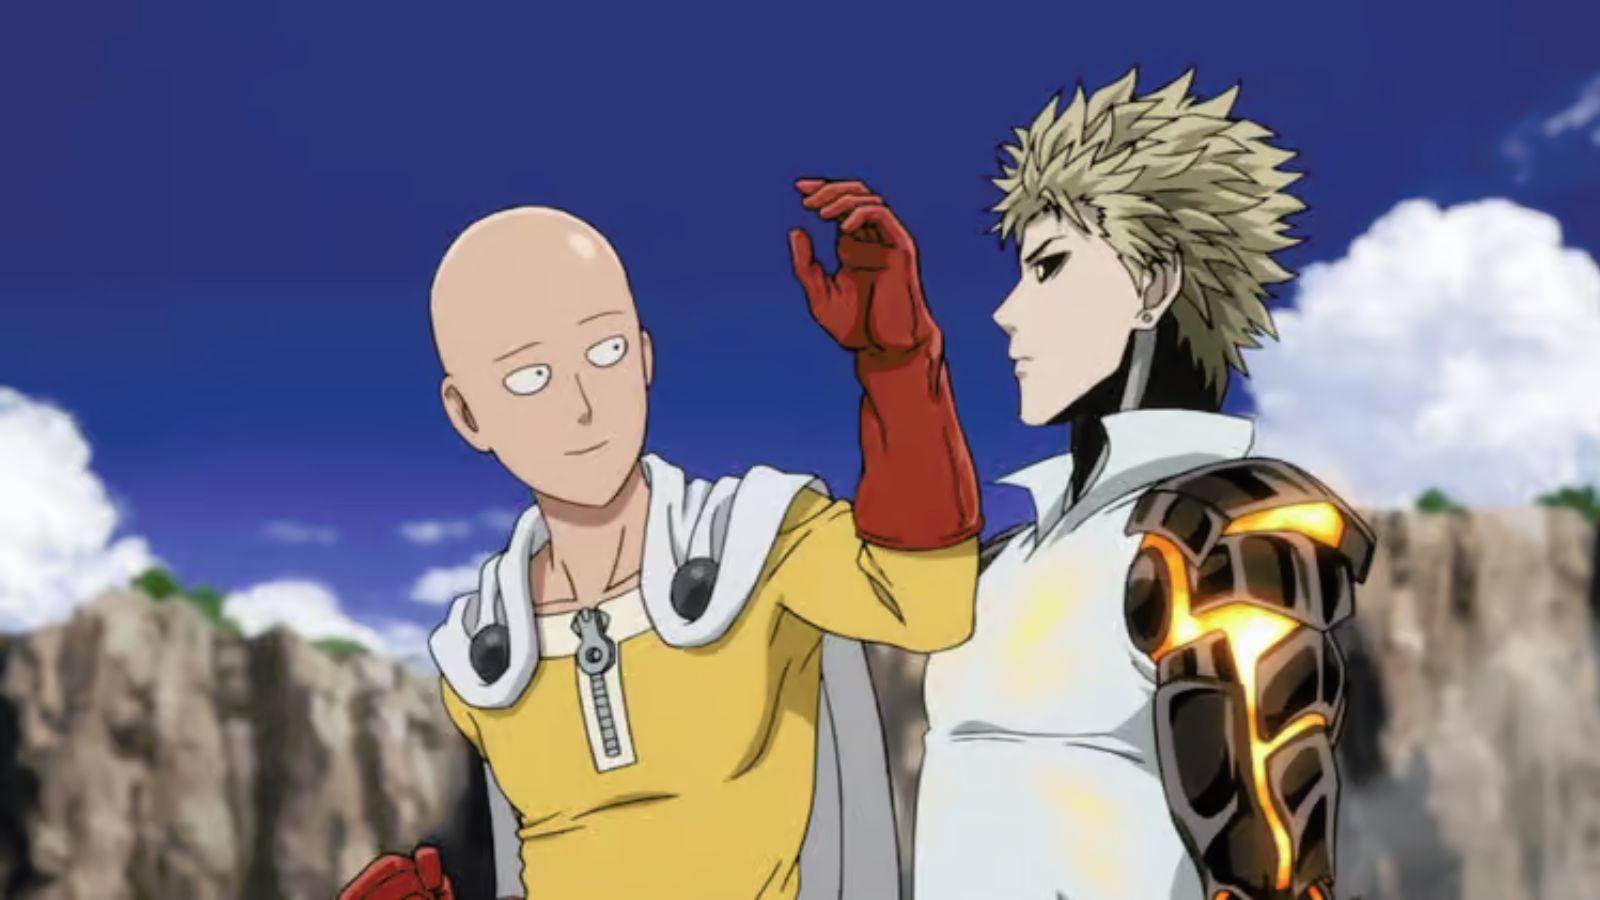 Saitama et Genos dans l'anime One Punch Man